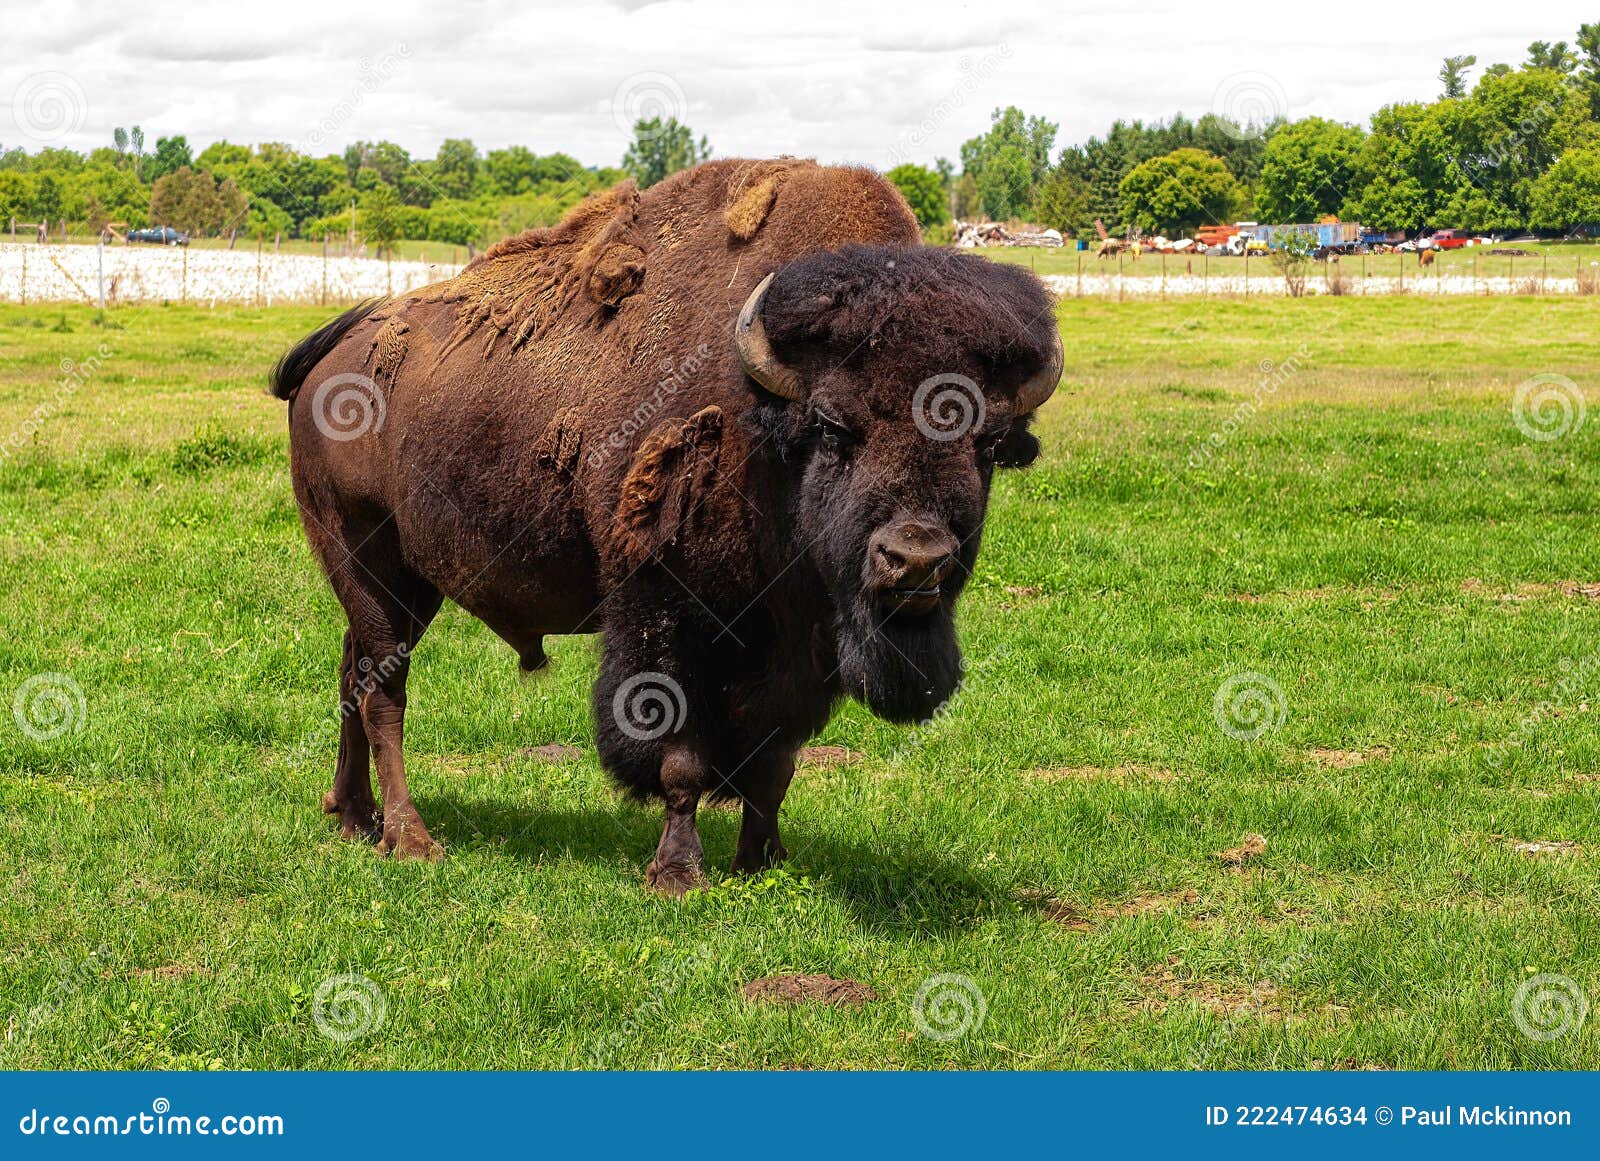 Alpha Male American Buffalo (bison) Stock Photo - of buffalo, penis: 222474634